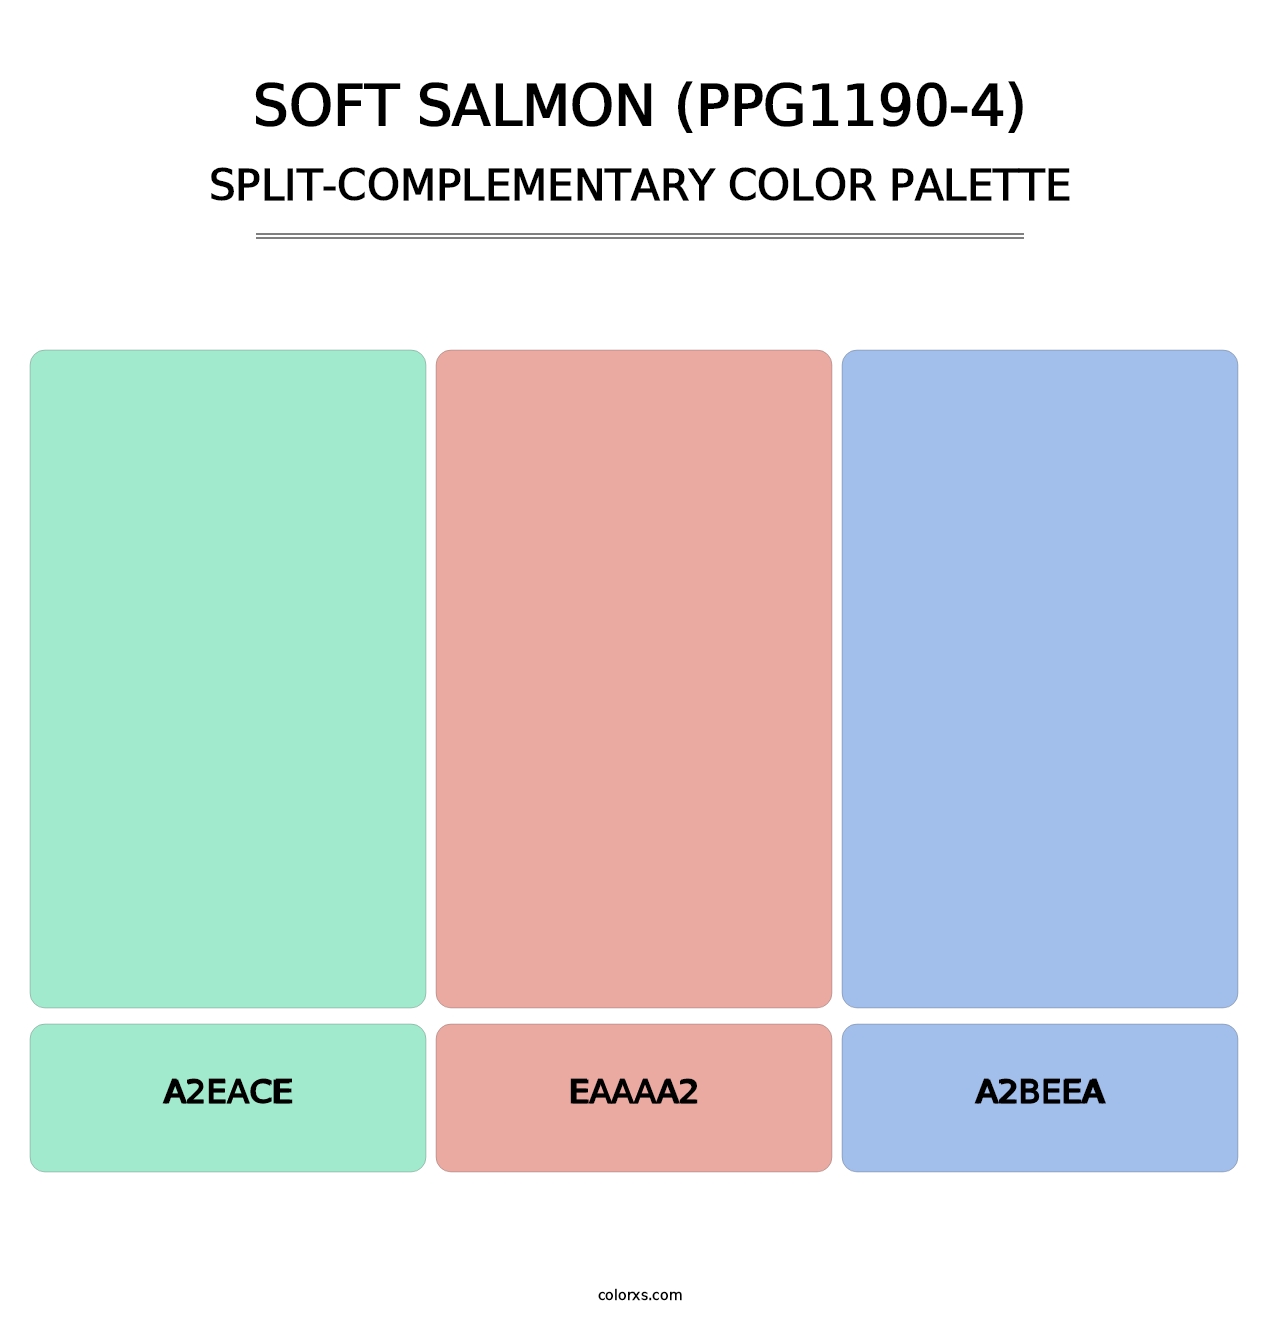 Soft Salmon (PPG1190-4) - Split-Complementary Color Palette